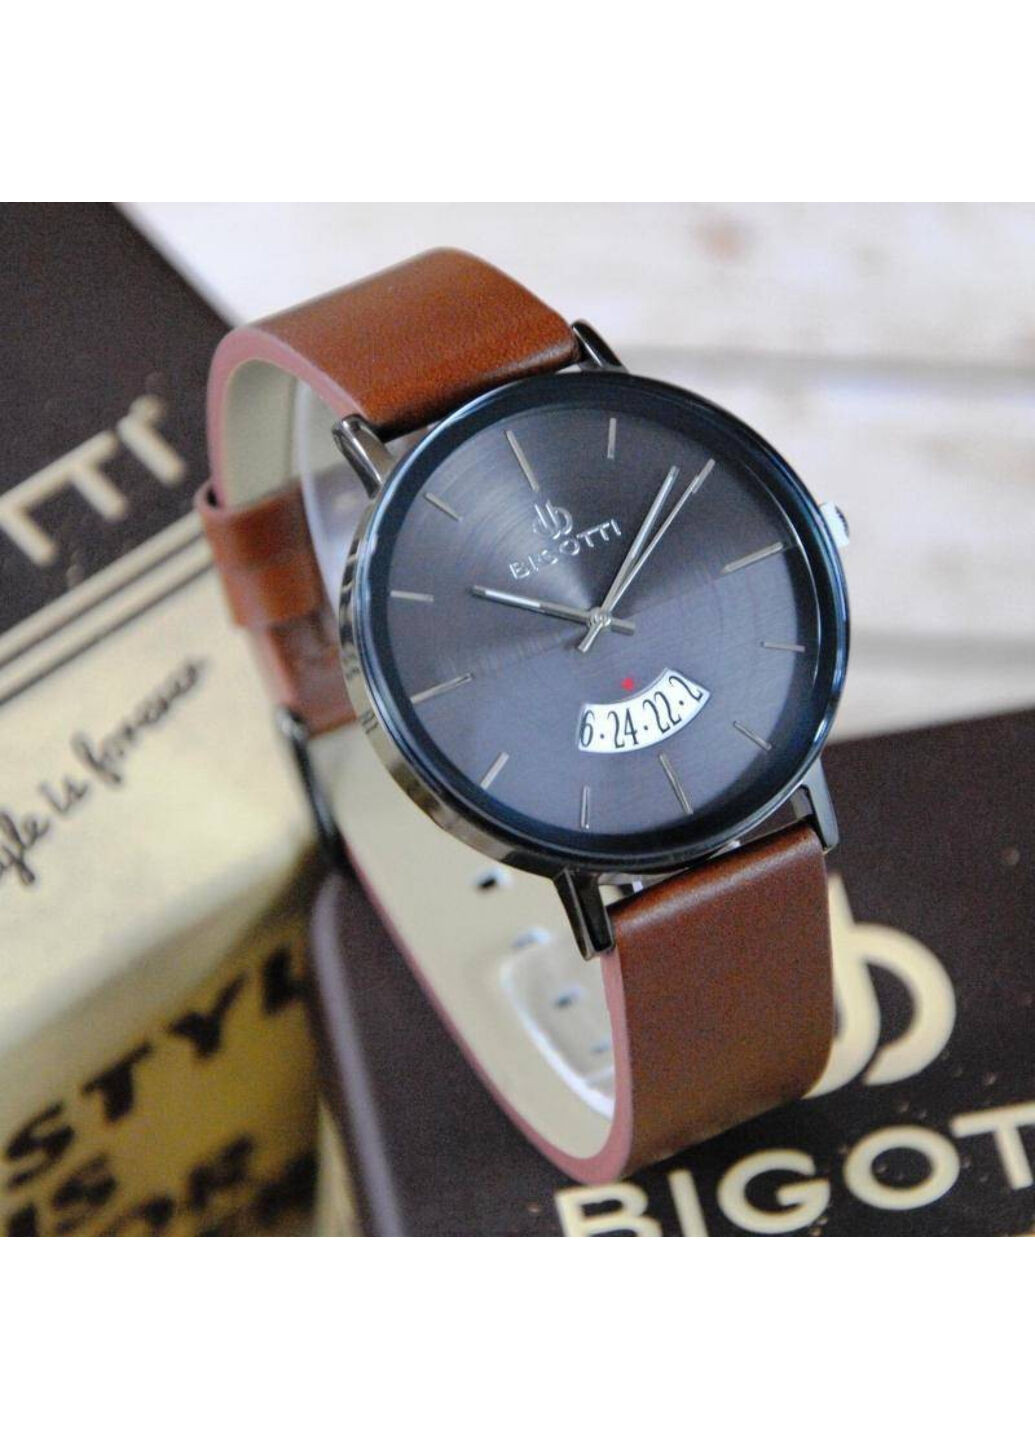 Часы наручные Bigotti bgt0176-3 (250237808)